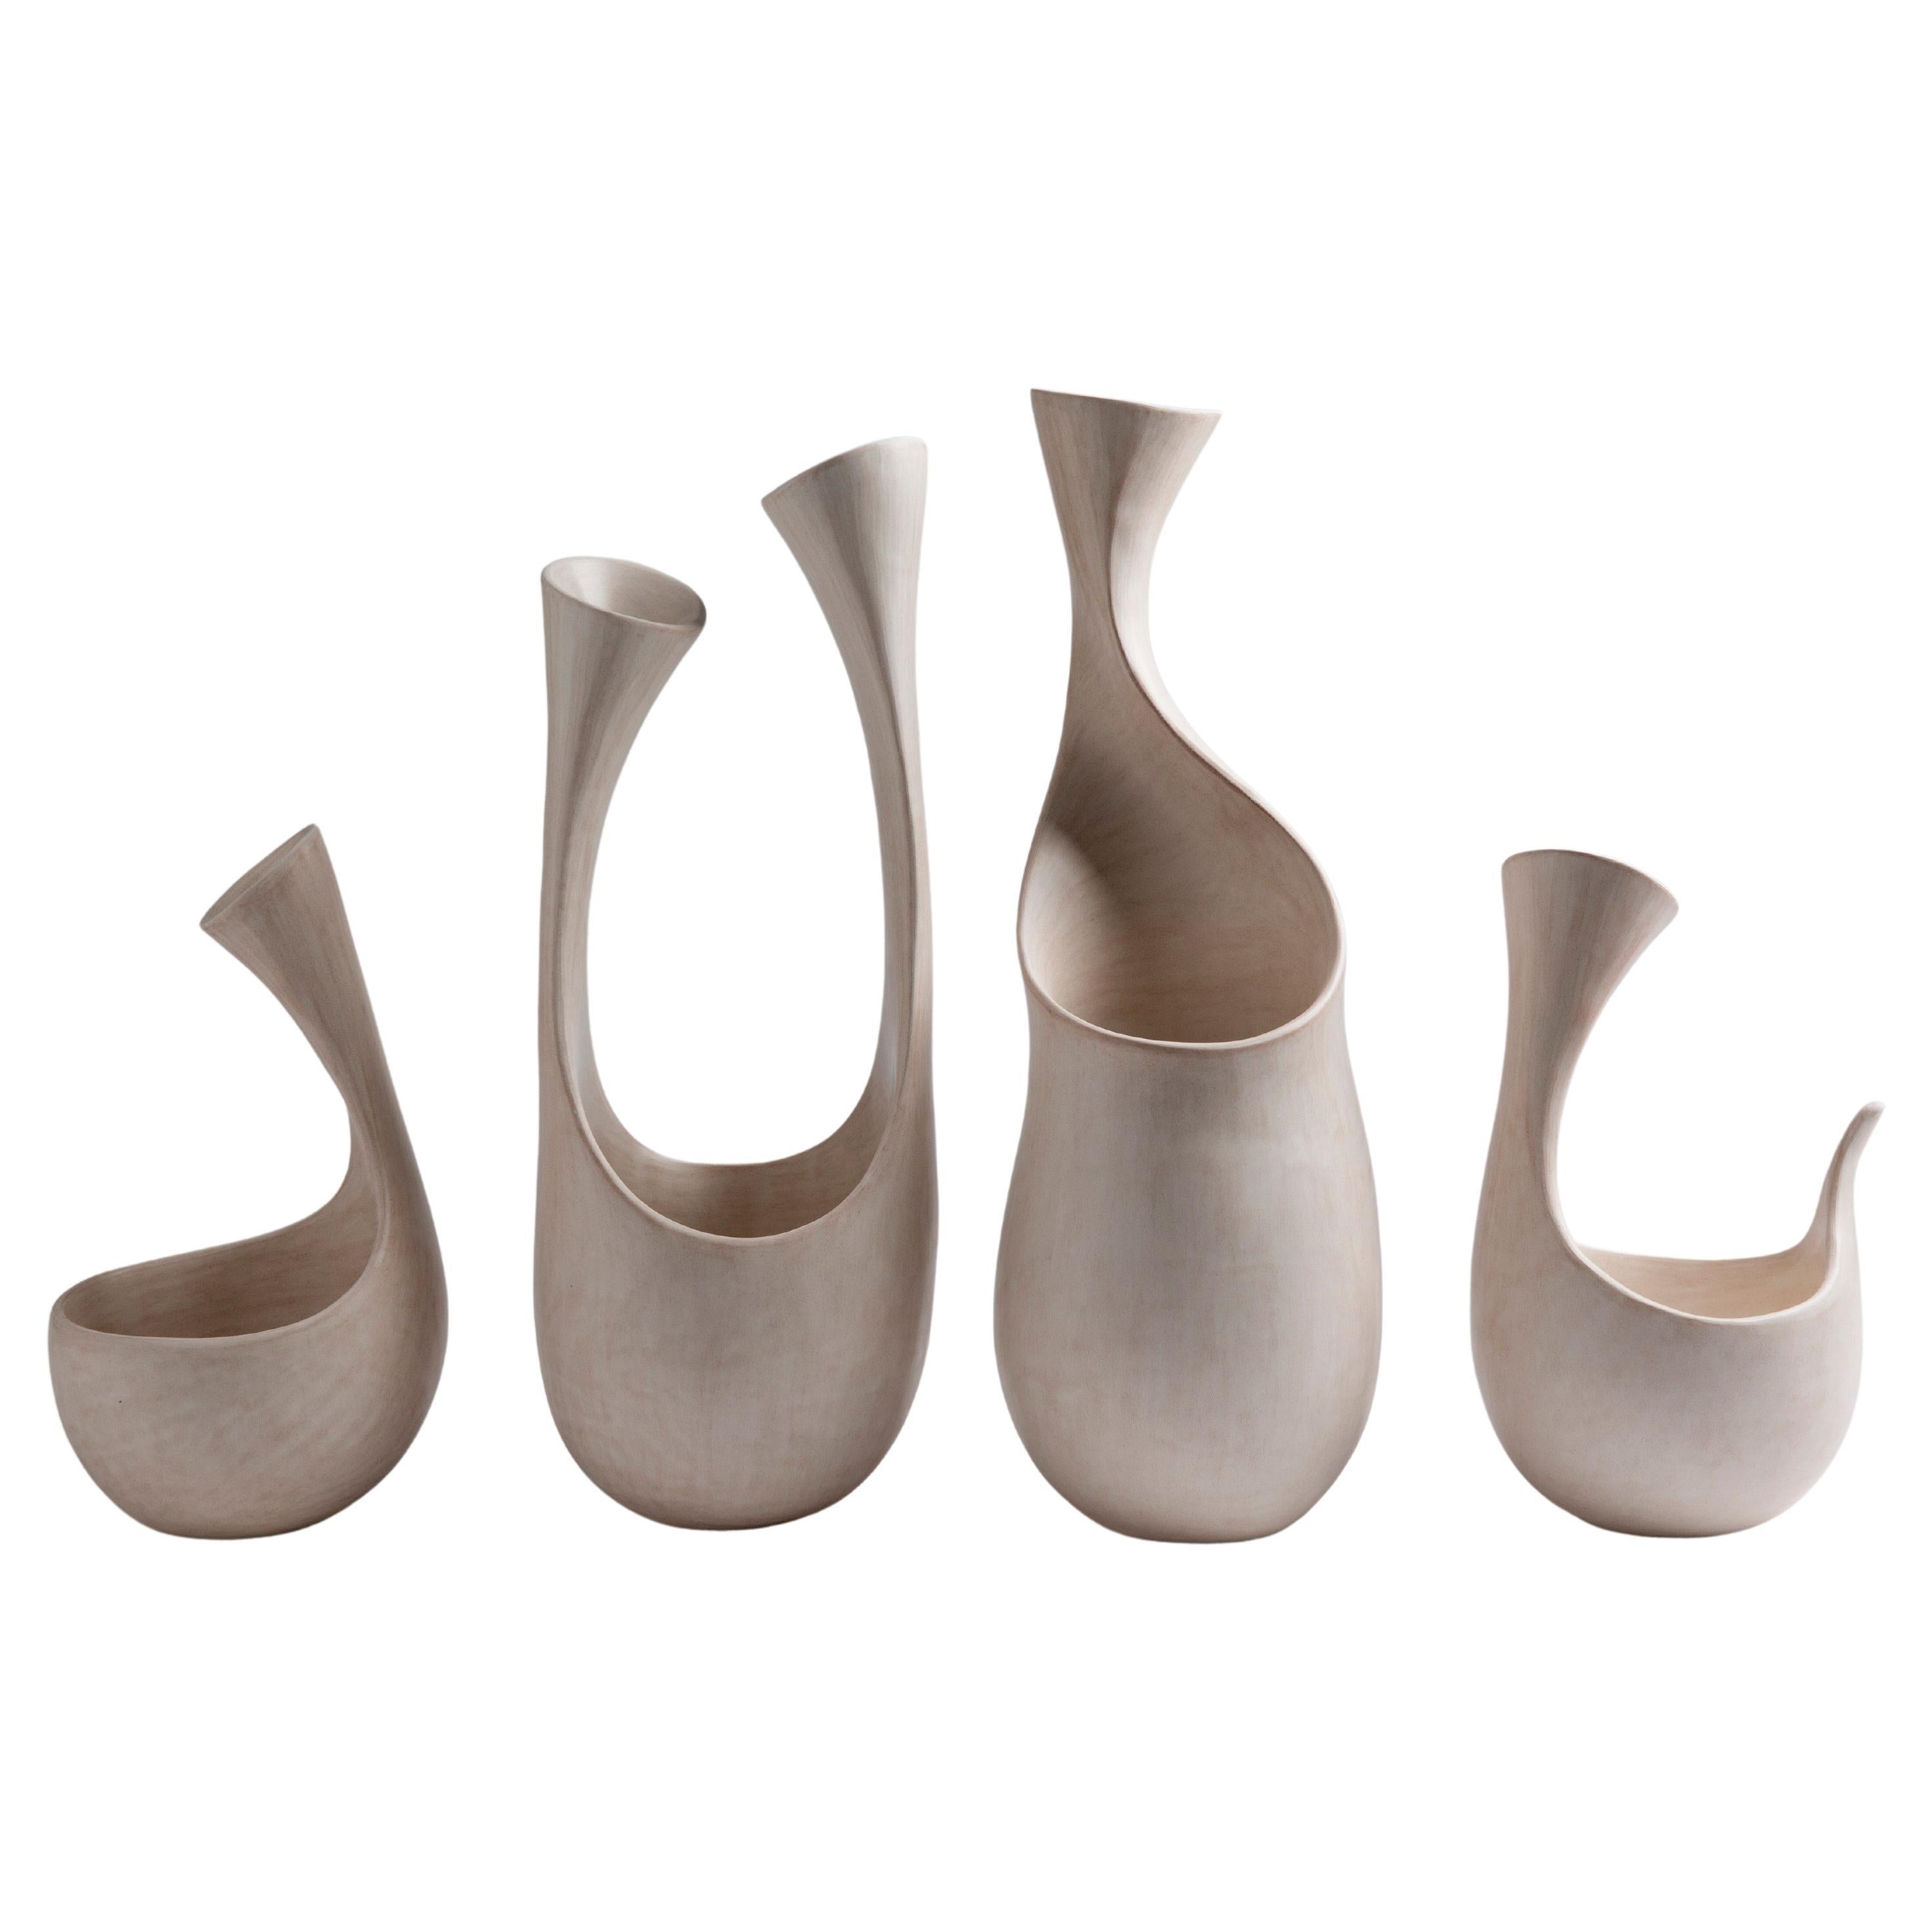 Group of Fluted Bowl-like Ceramic Vessels, Tina Vlassopulos